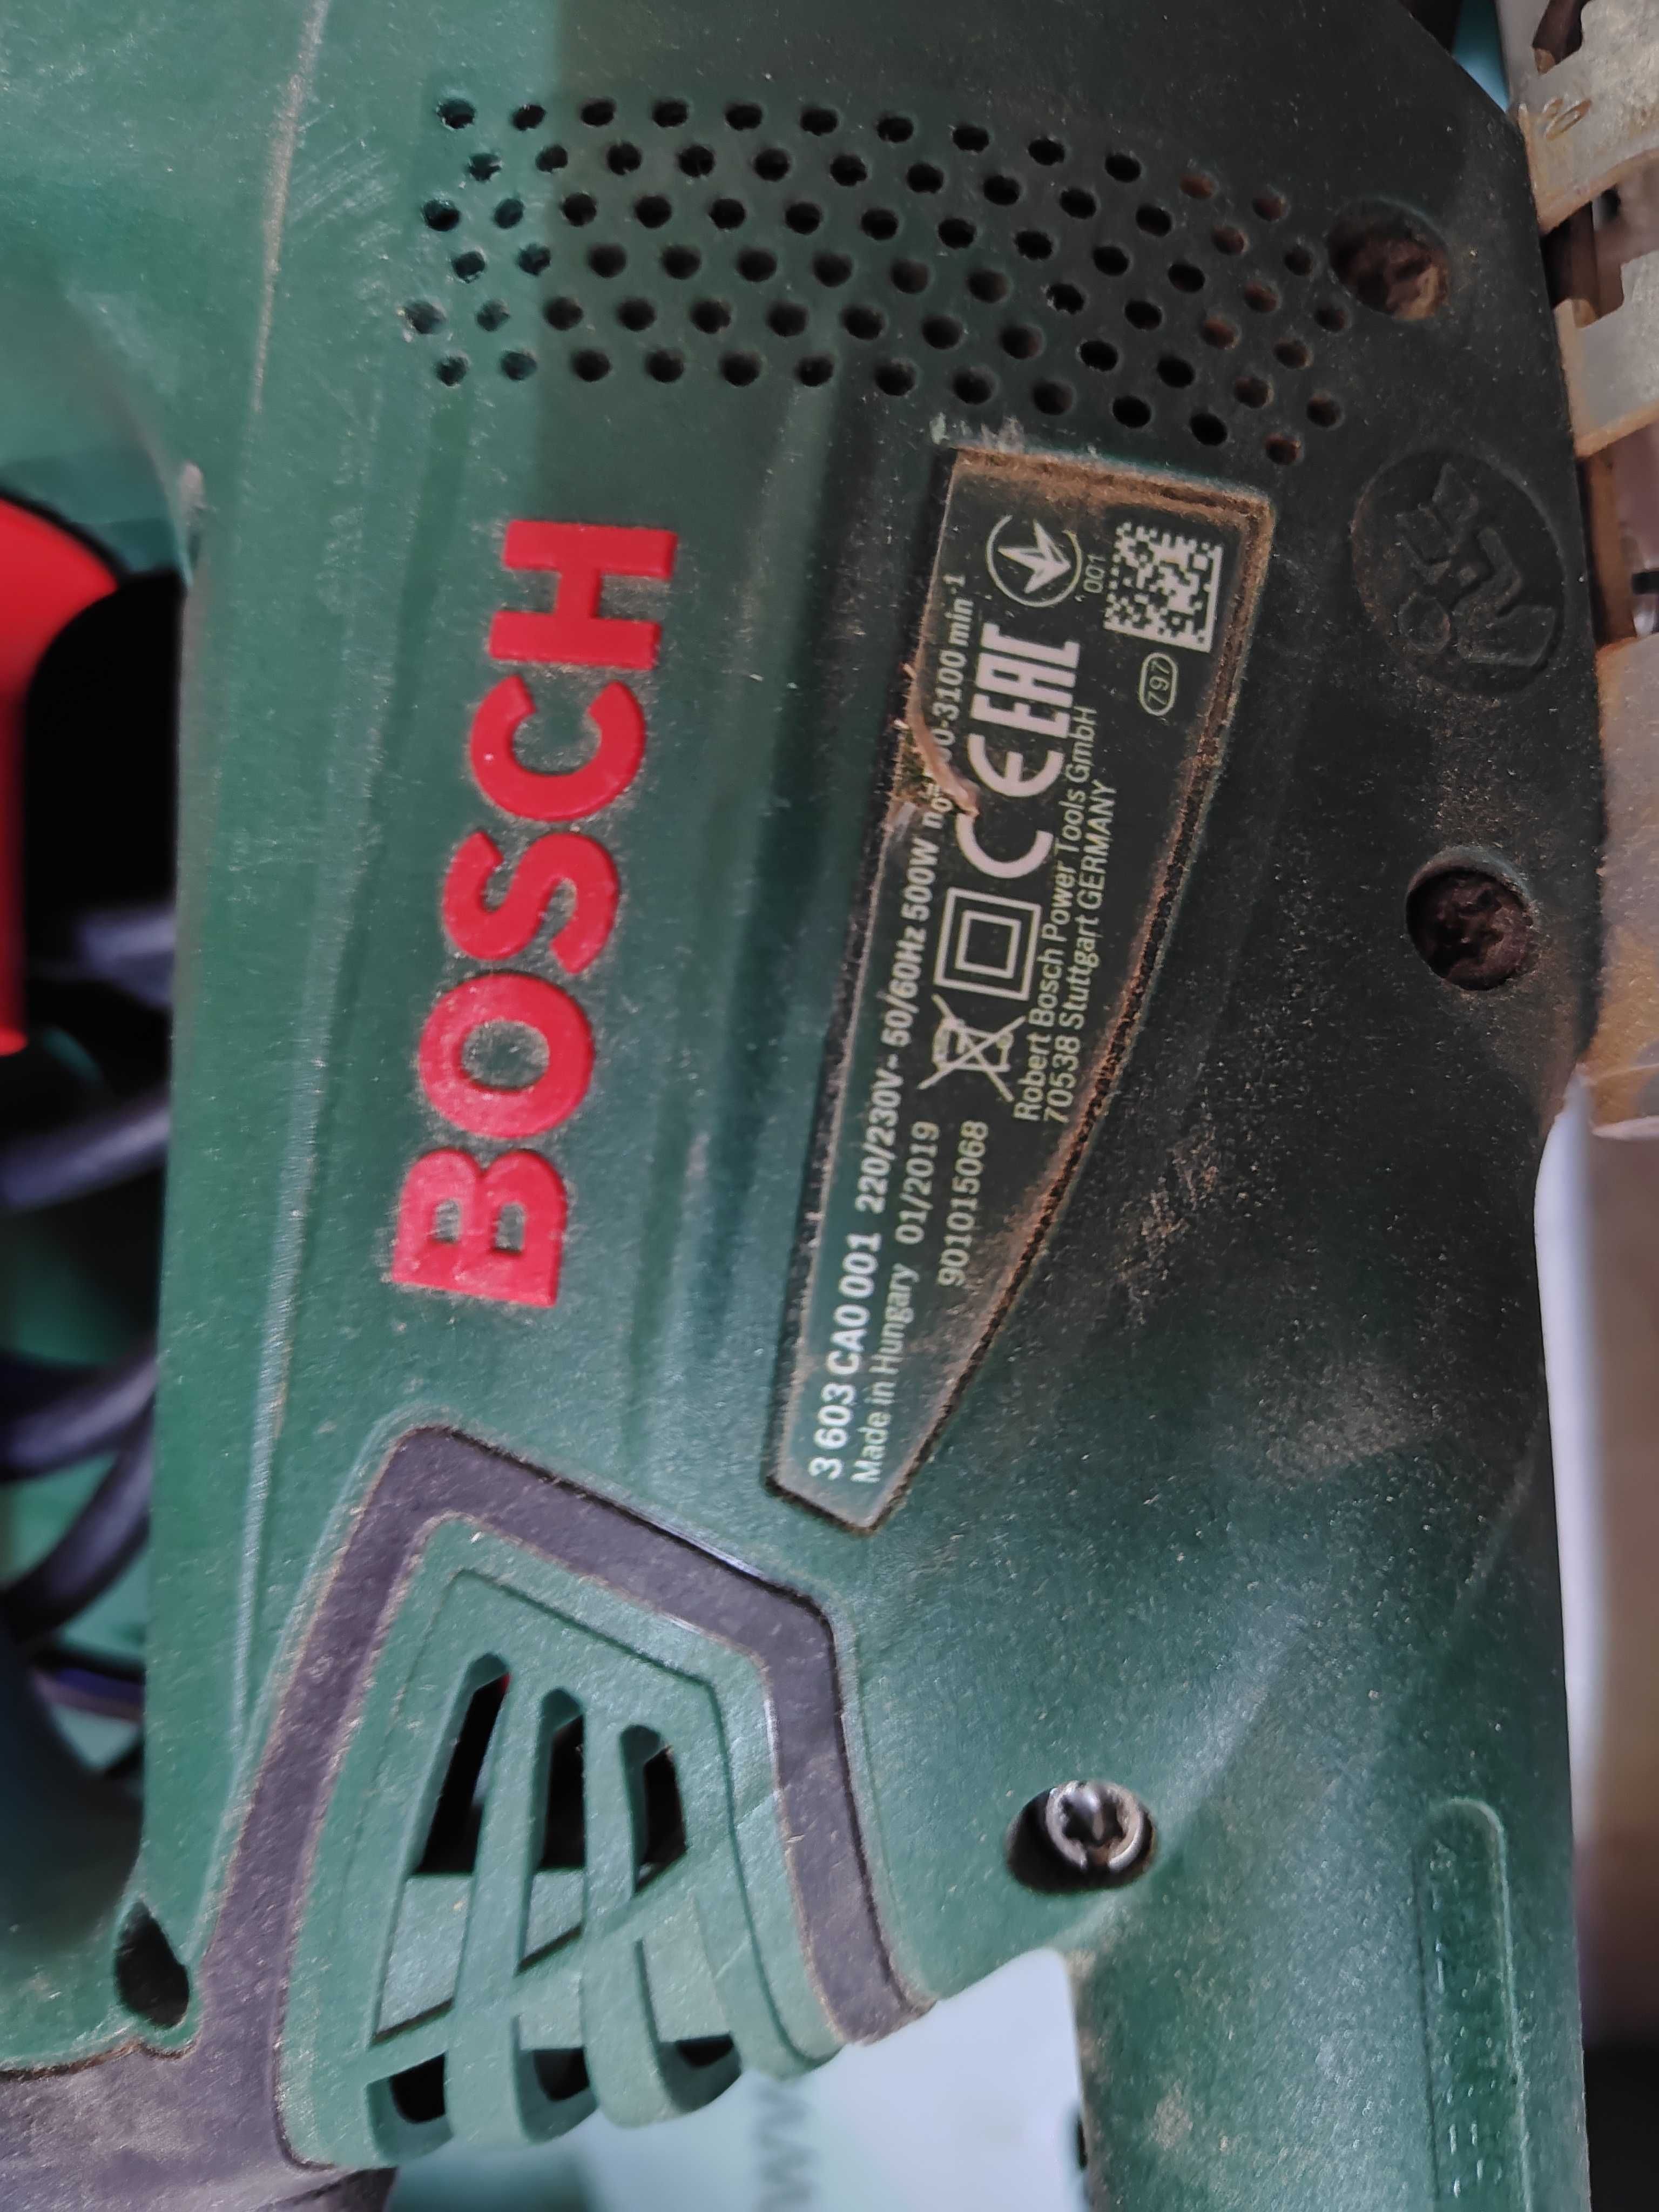 Fierastrau pendular Bosch PST 700 E COMPACT, 500 W